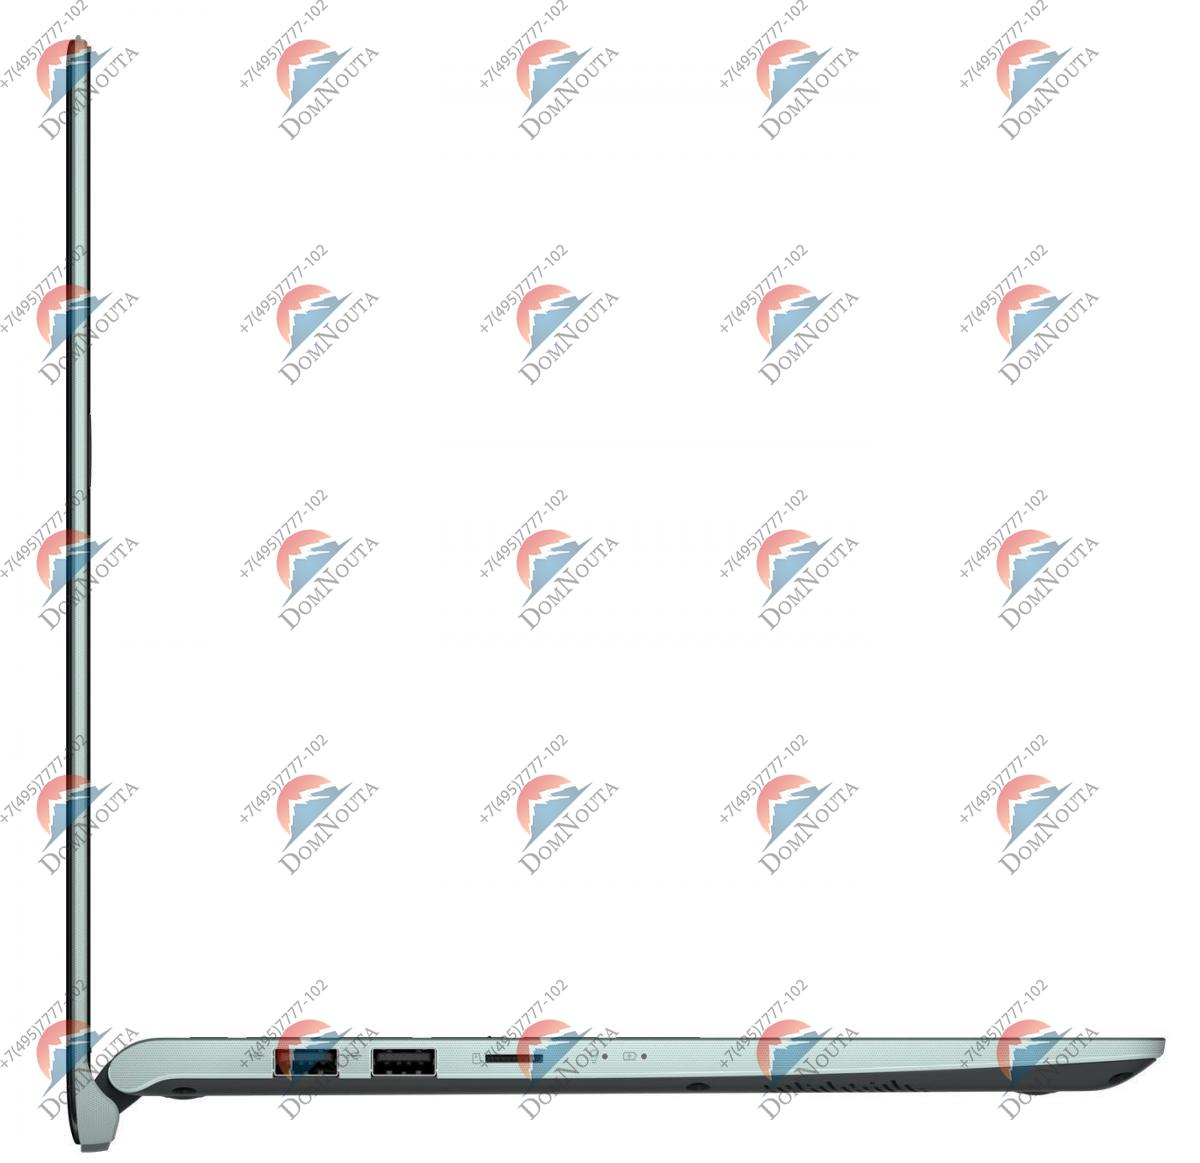 Ноутбук Asus S430Fn